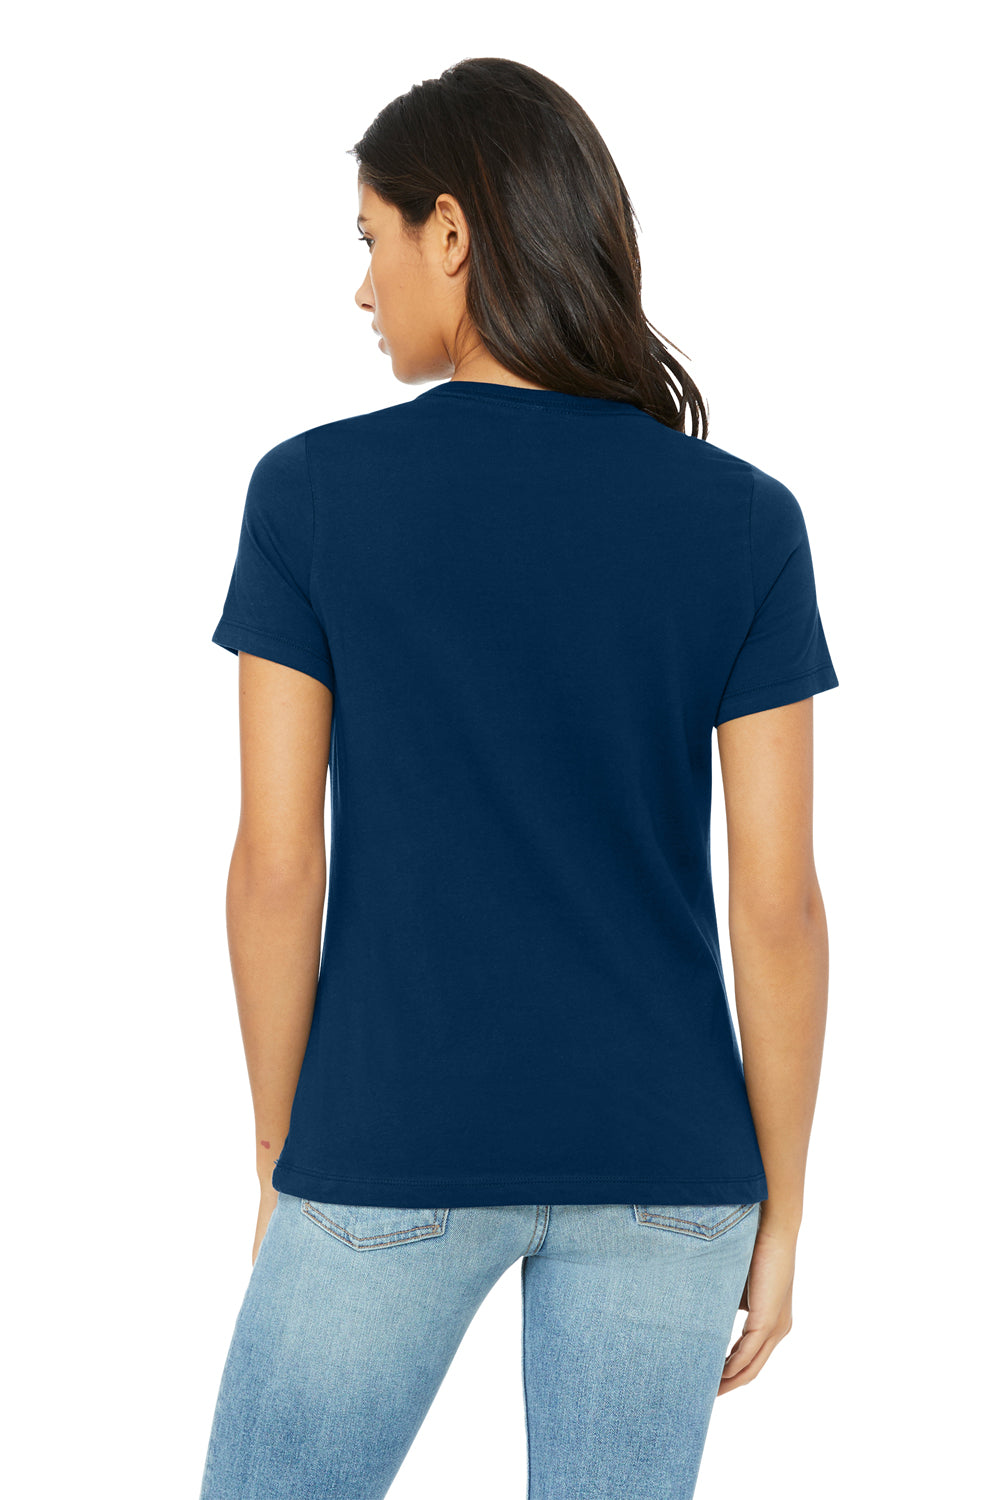 Bella + Canvas BC6413 Womens Short Sleeve Crewneck T-Shirt Solid Navy Blue Model Back